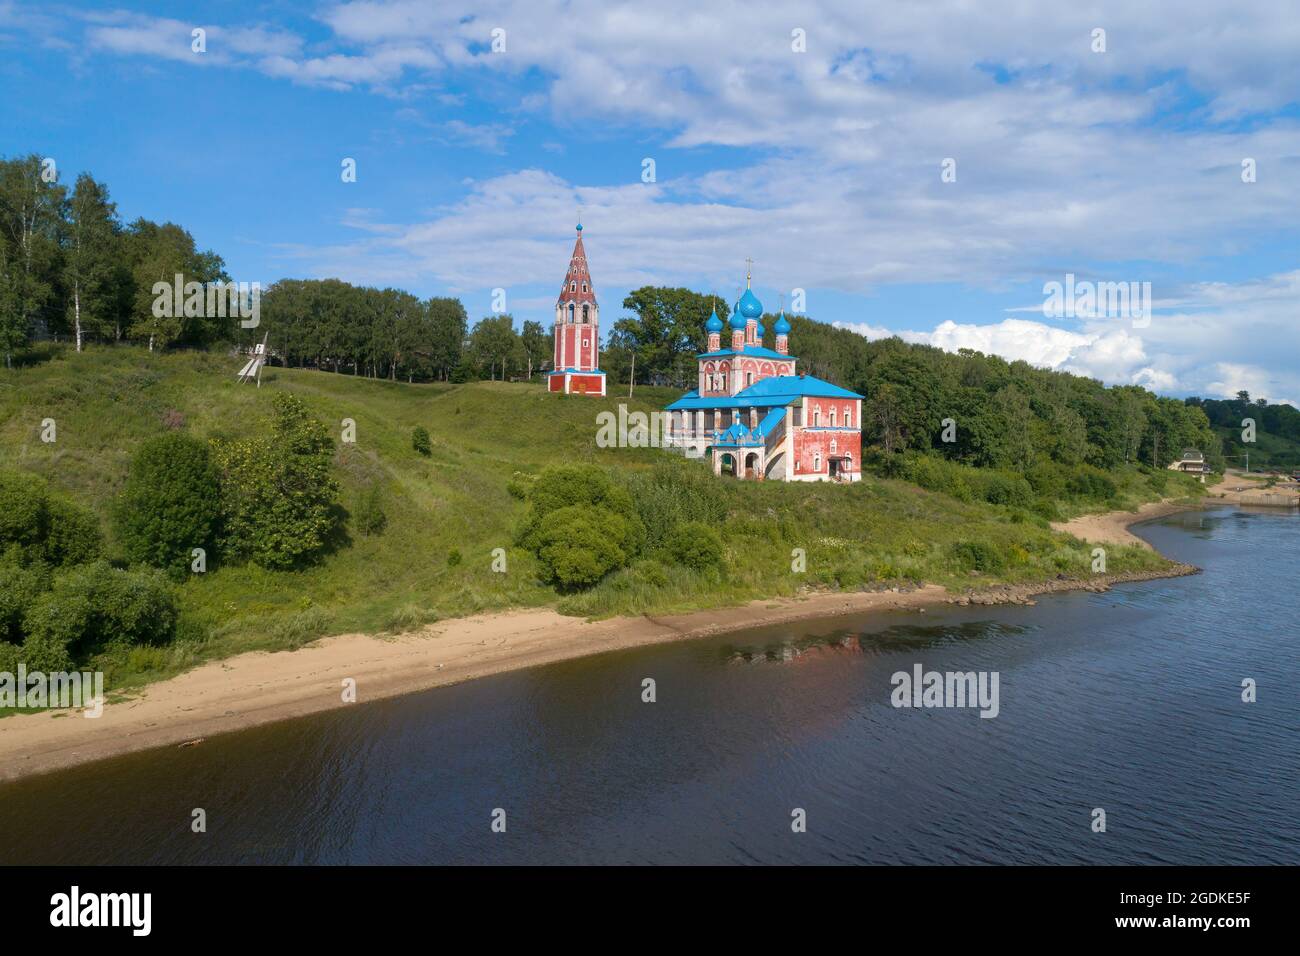 Ancient Kazan church on the banks of the Volga river in a summer landscape. Tutaev (Romanov-Borisoglebsk), Russia Stock Photo